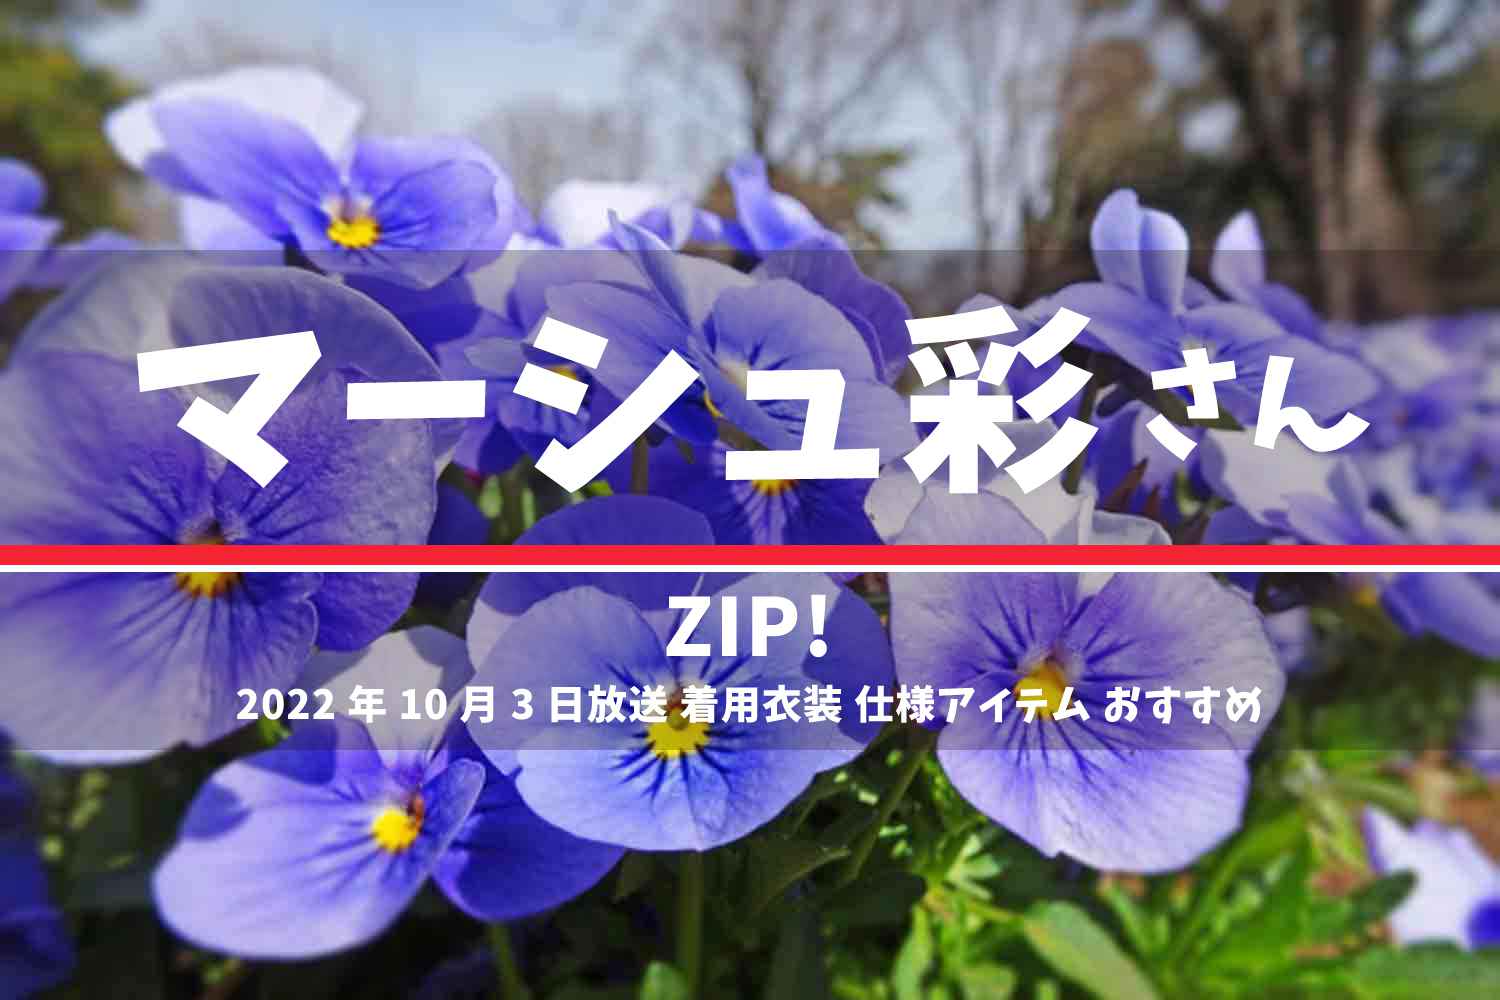 ZIP! マーシュ彩さん 番組 衣装 2022年10月3日放送